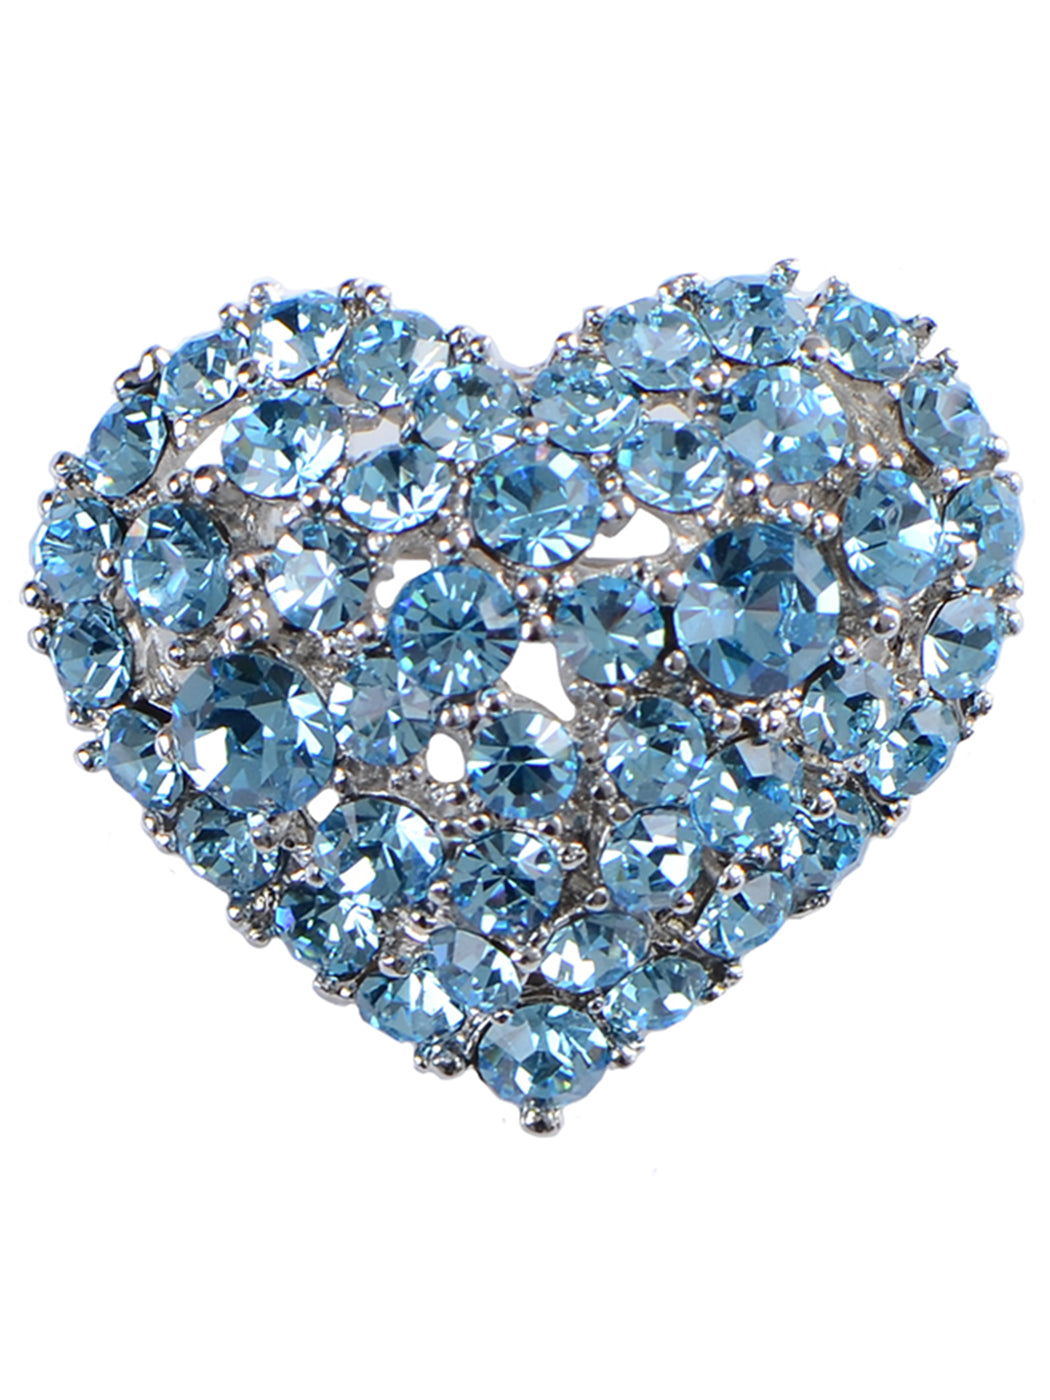 Valentine Heart Love Brooch Pin